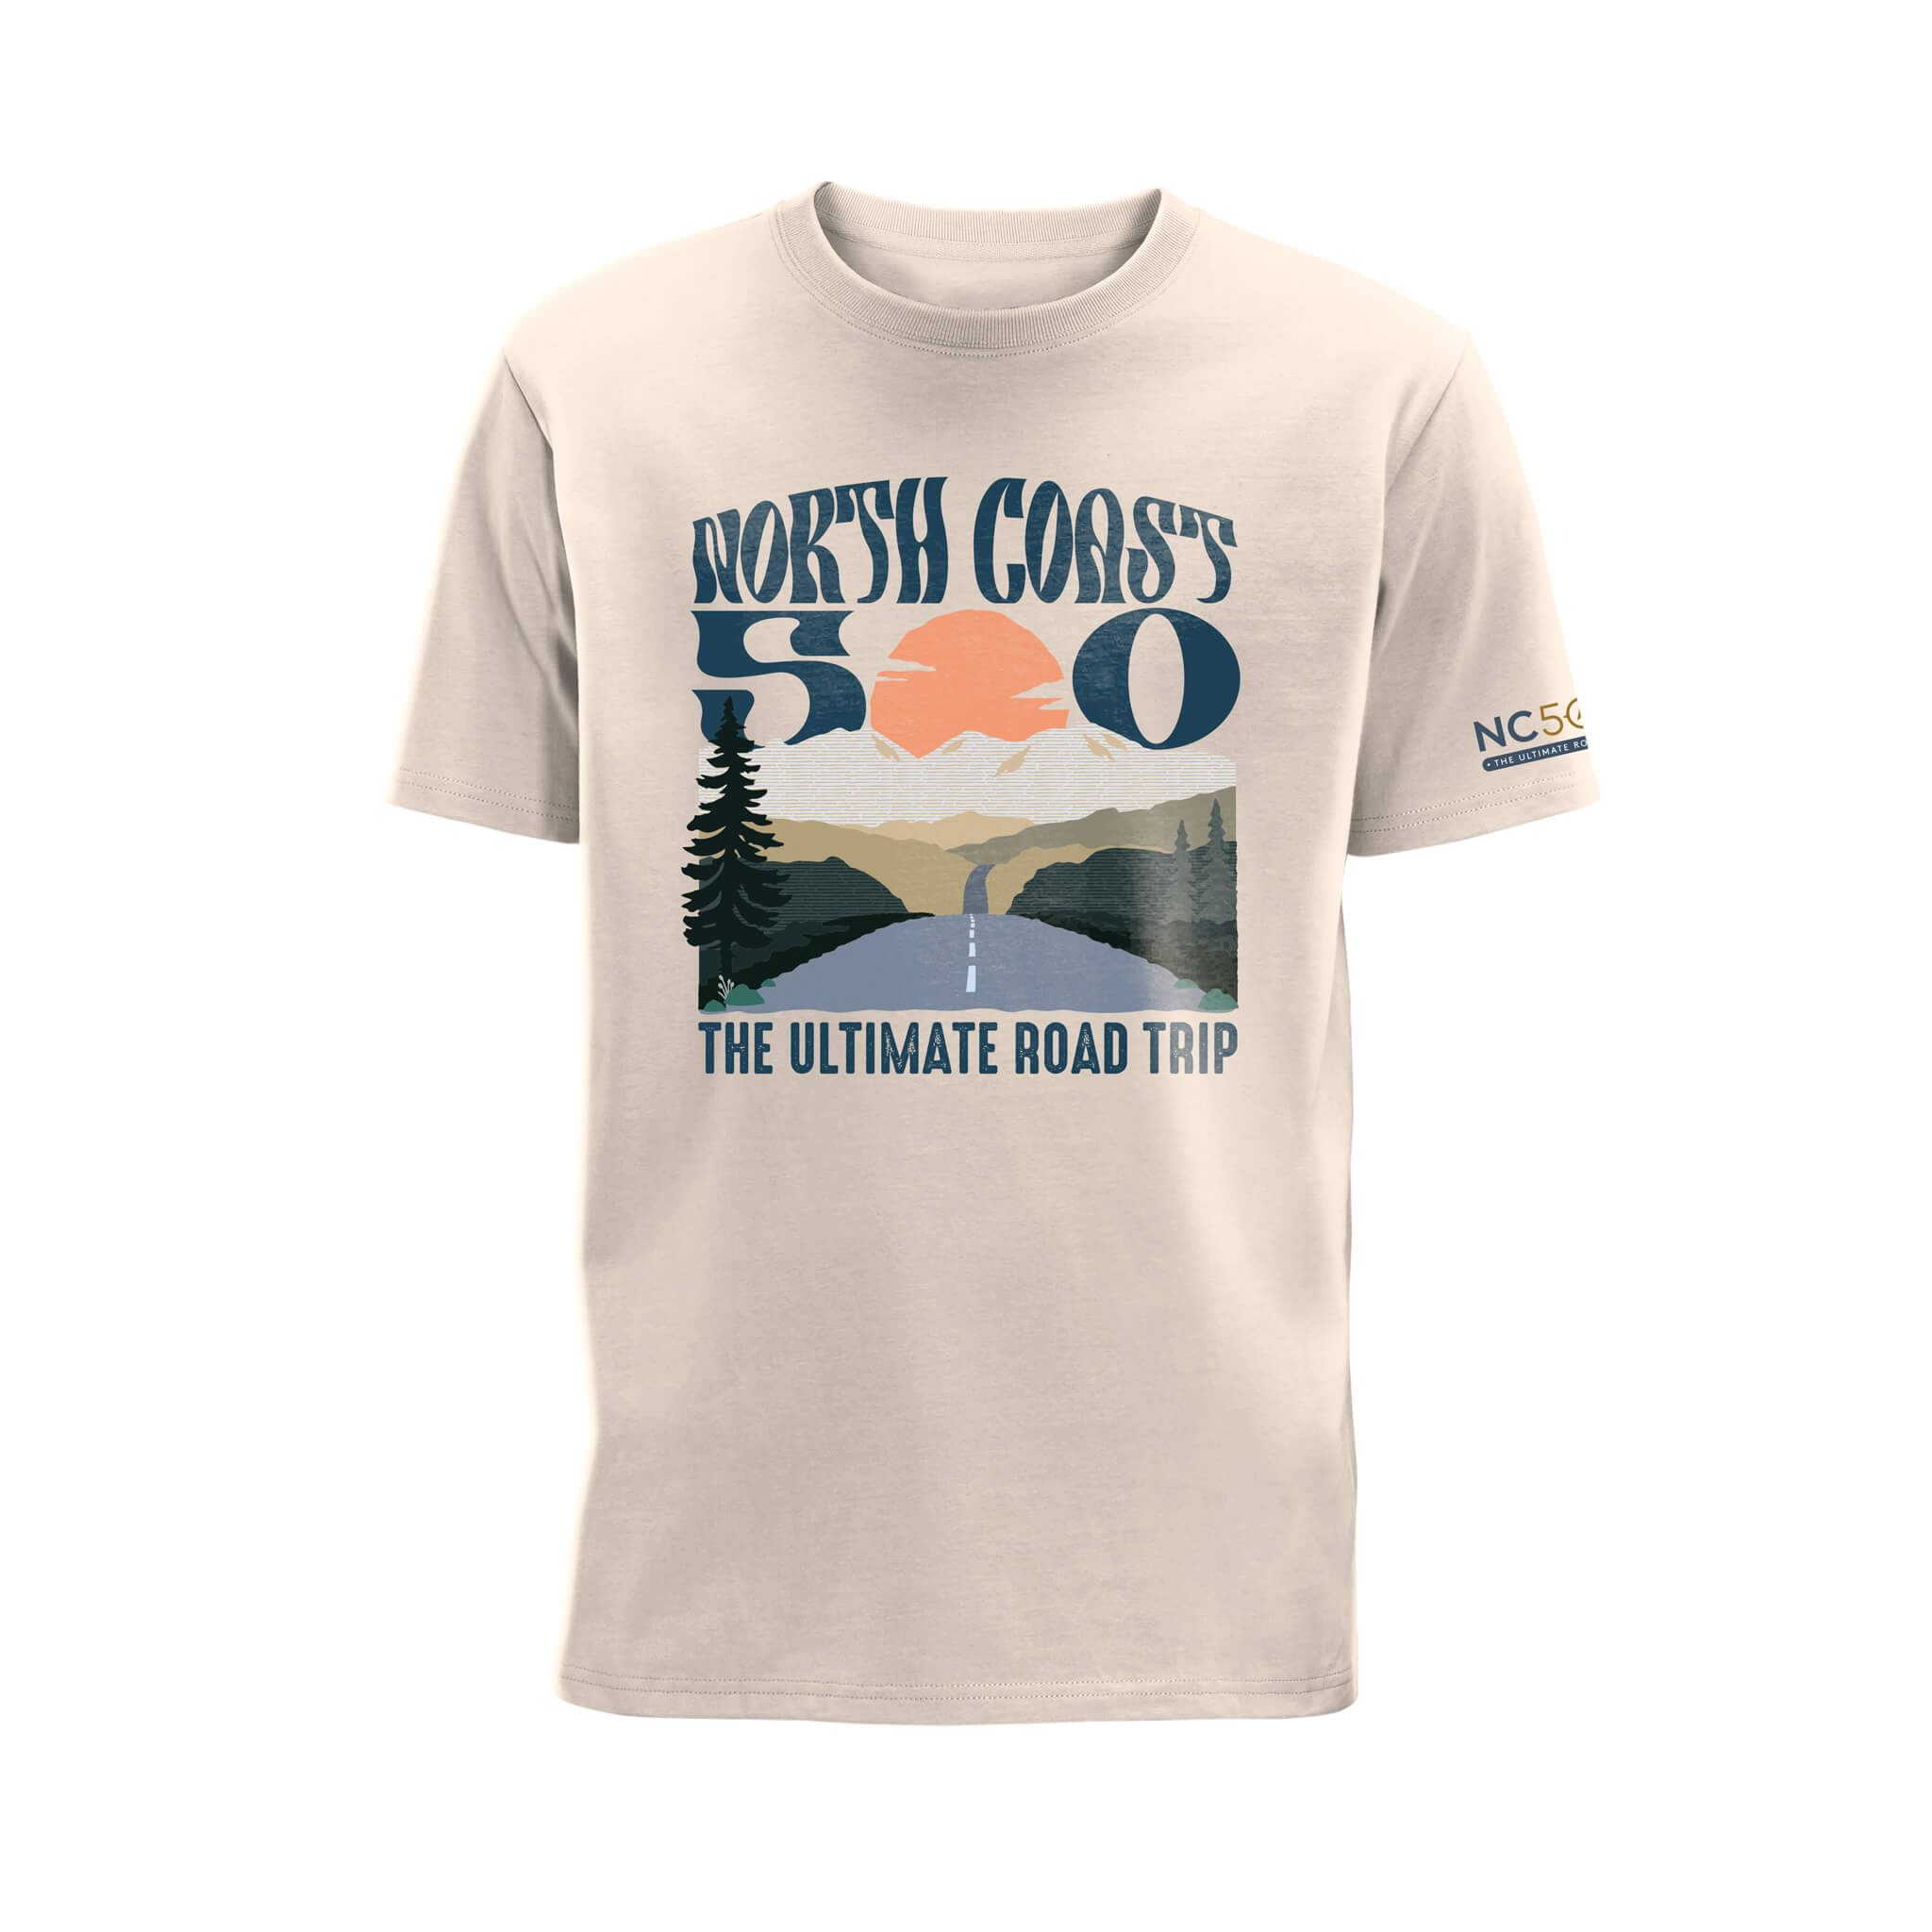 Into The Sunset Organic Cotton T-Shirt - Off White - North Coast 500